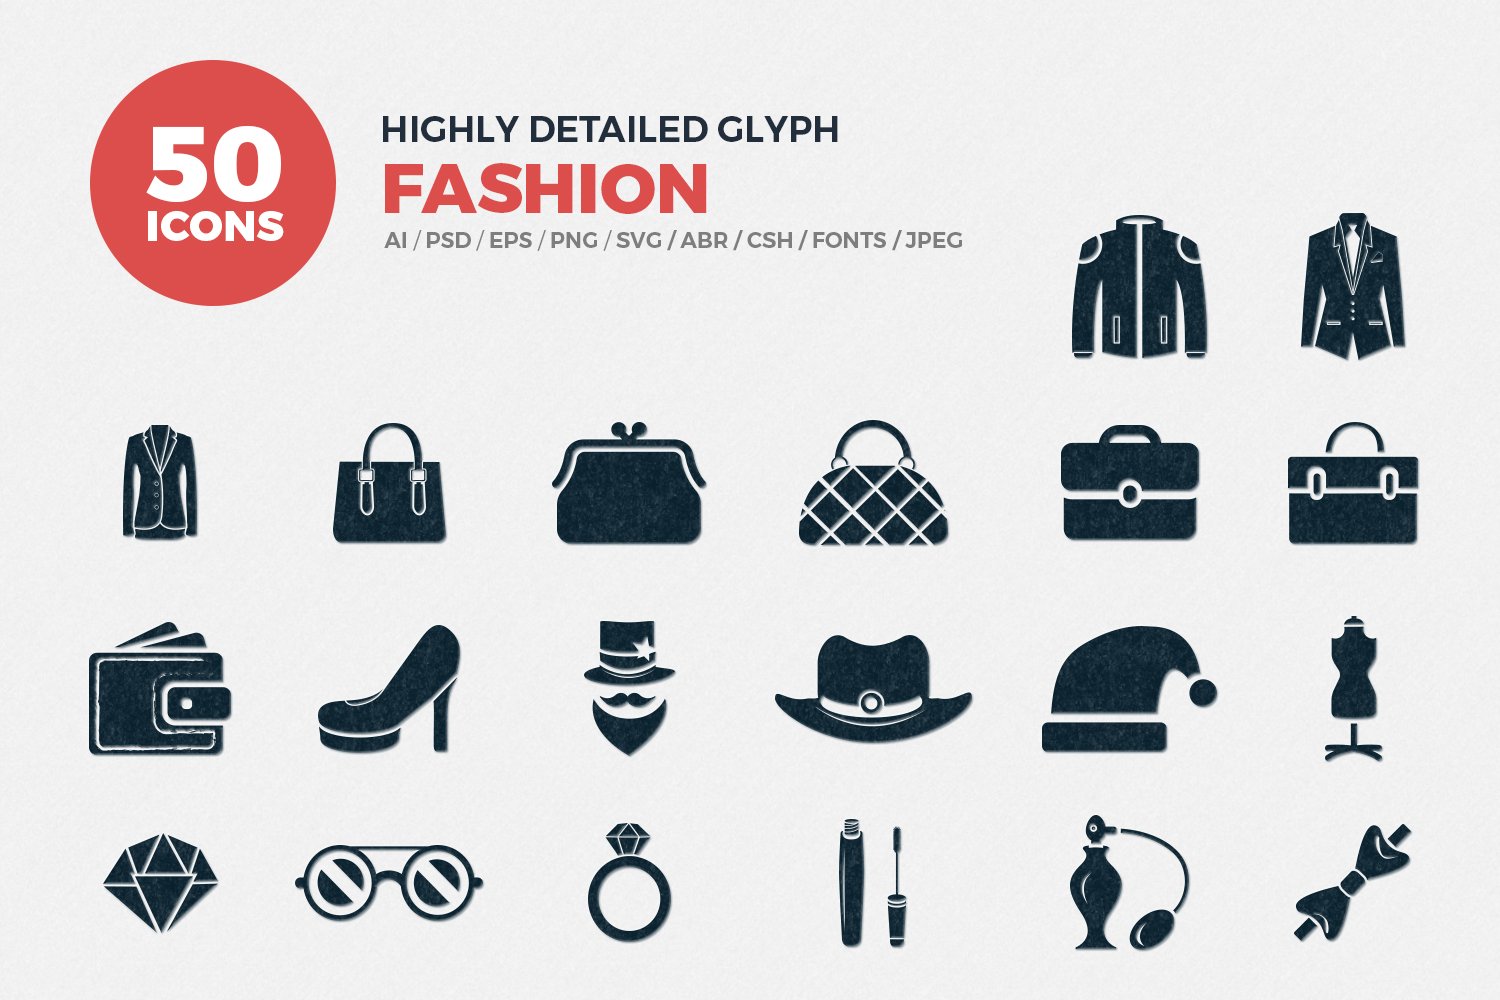 Glyph Icons Fashion Set cover image.